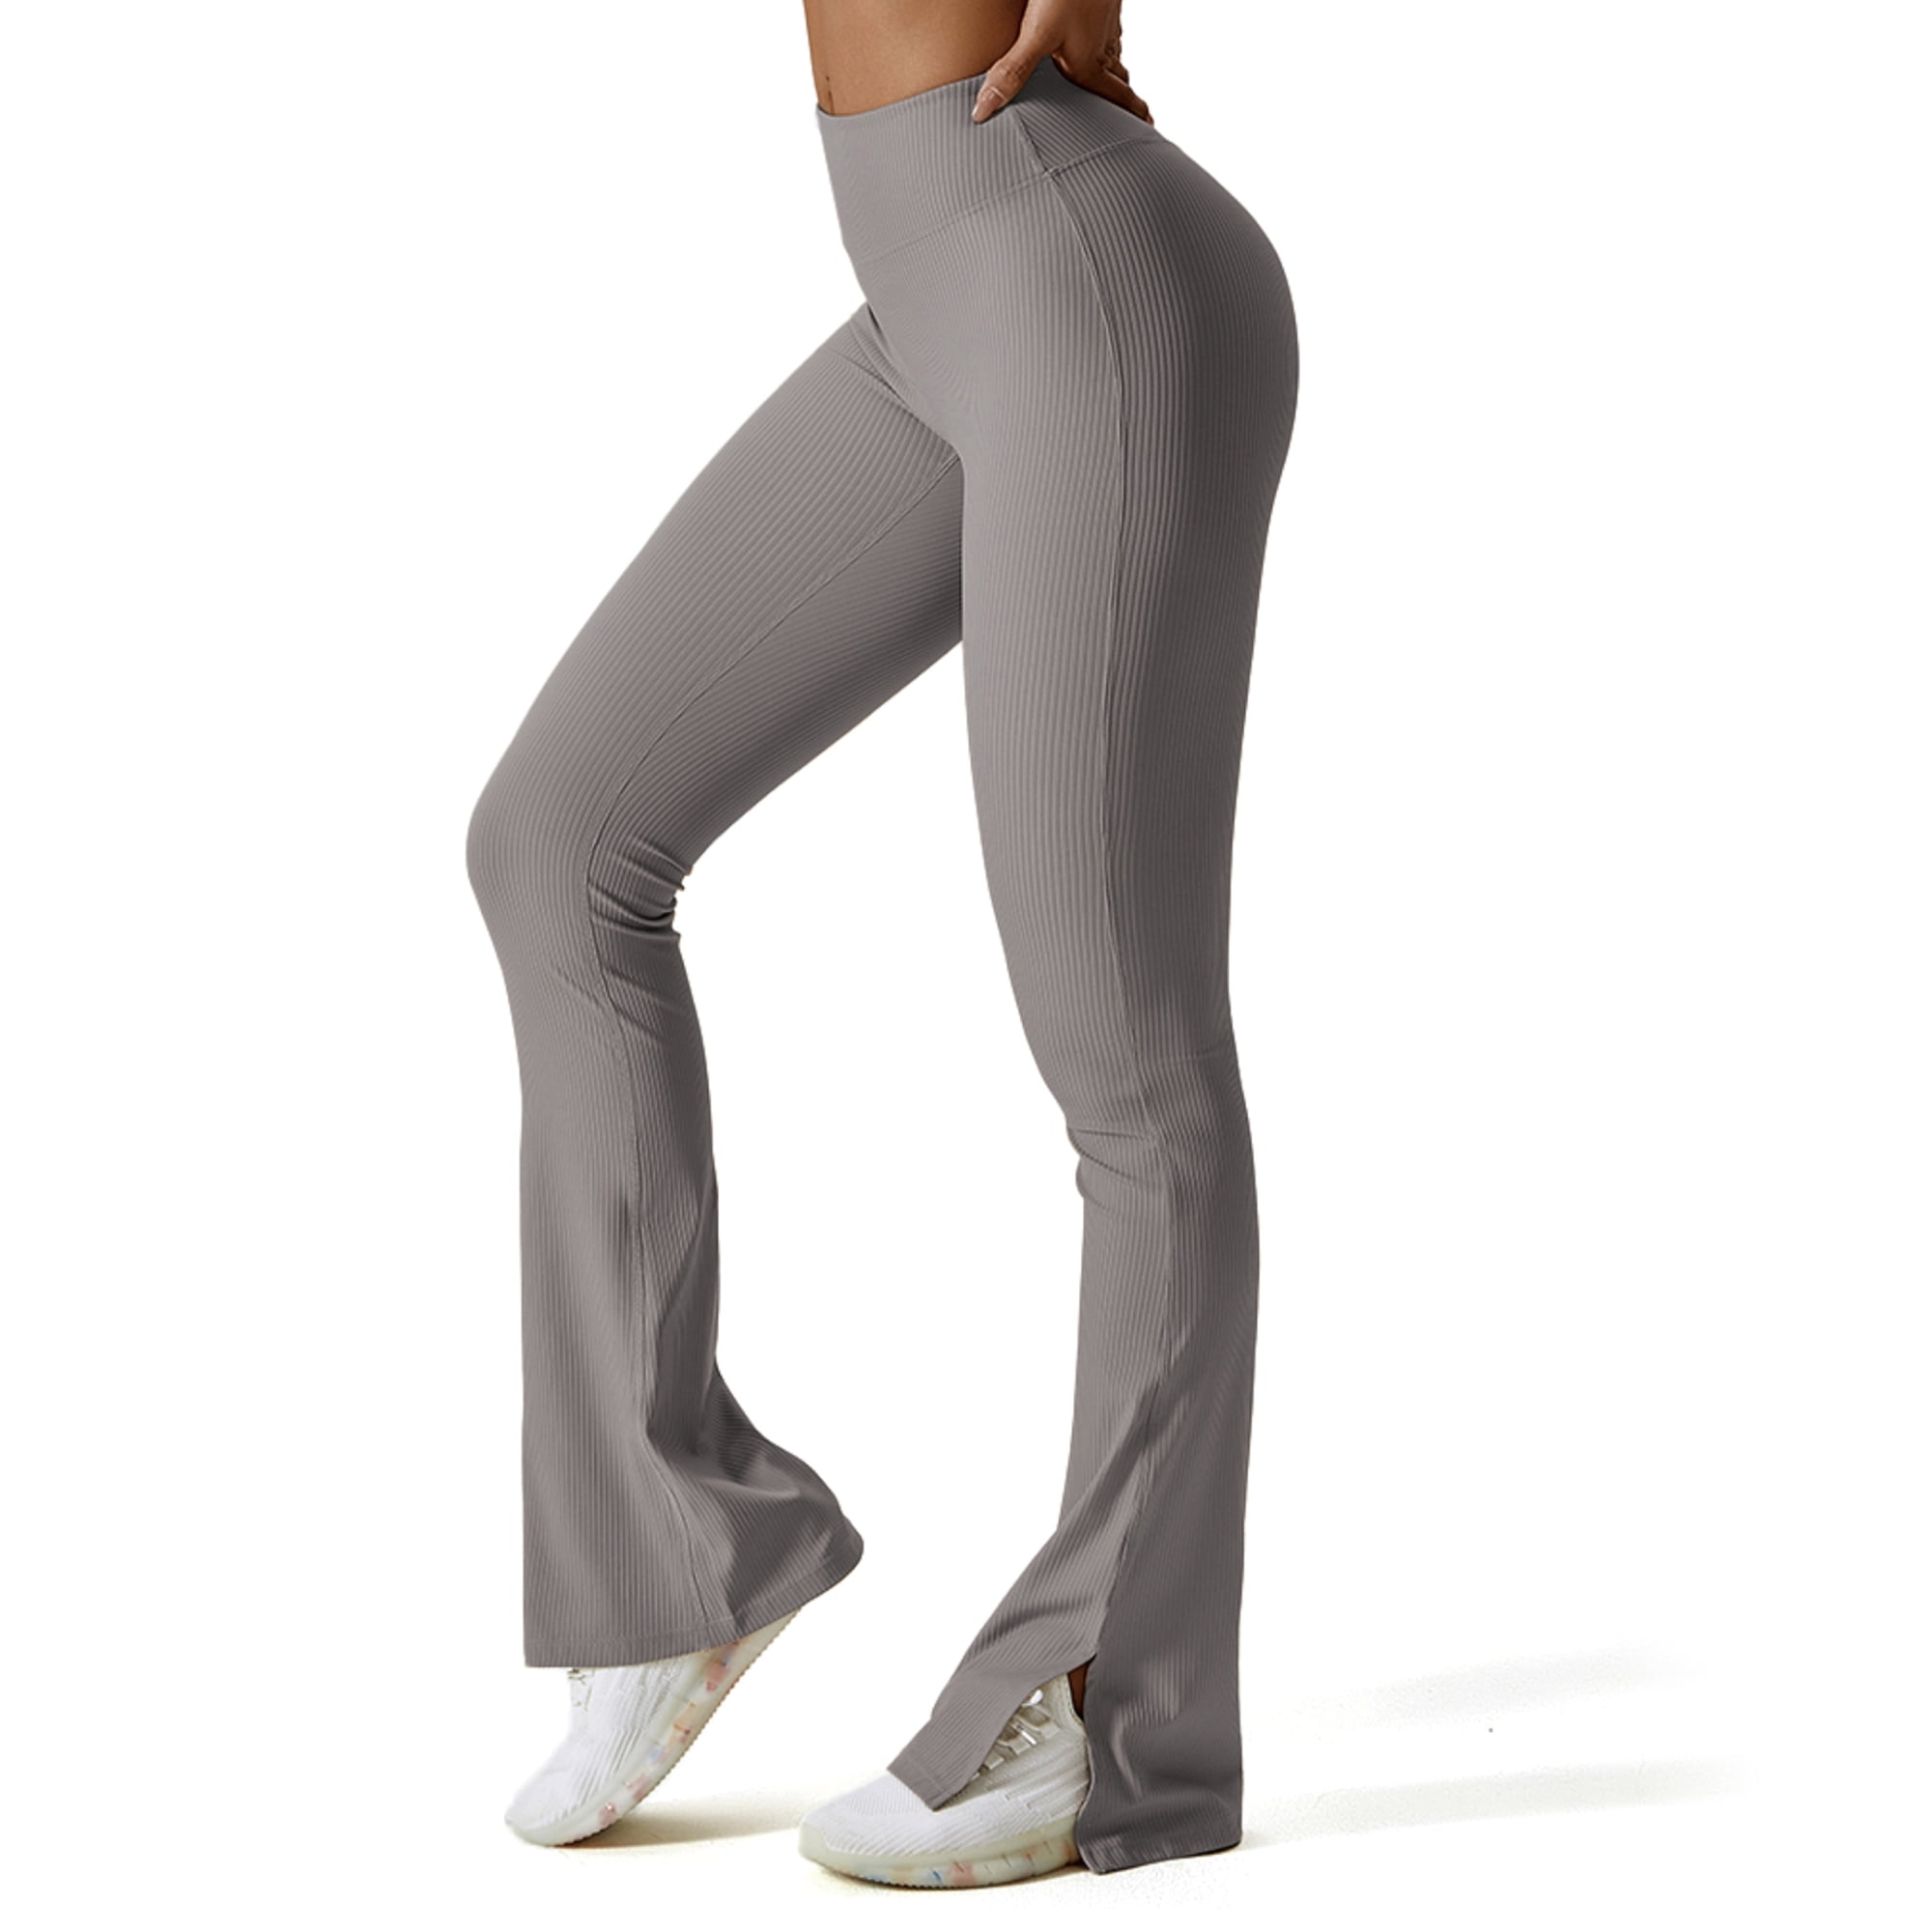  Fleece Lined Flare Leggigns For Women Bootcut Yoga Pants  Thermal Bootleg Pants Winter Workout Flare Leggings